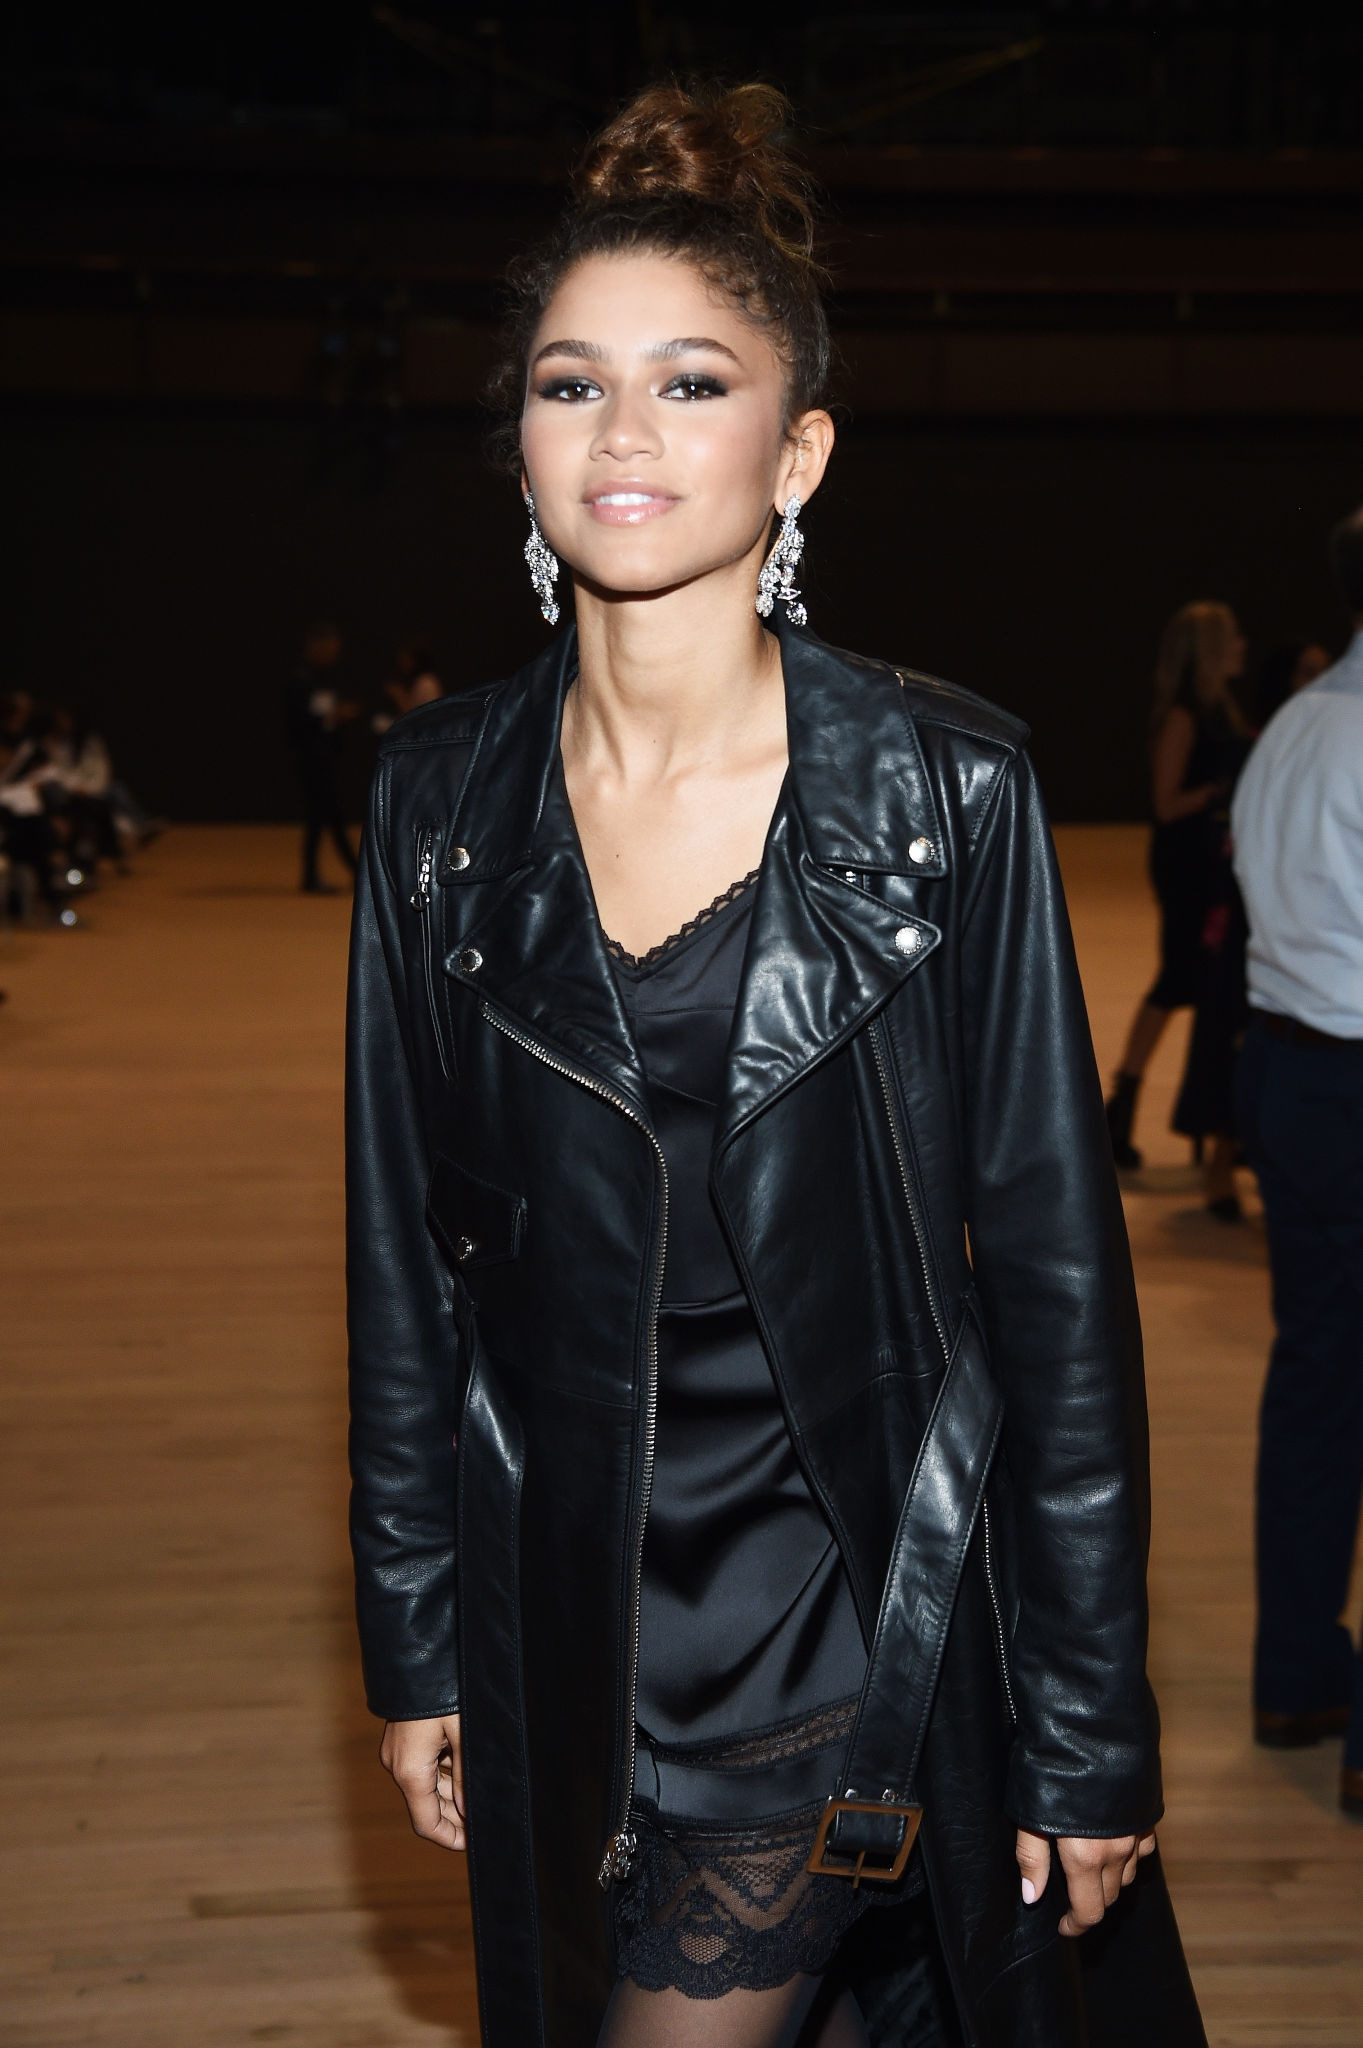 Zendaya attends the Marc Jacobs Spring 2020 Runway Show